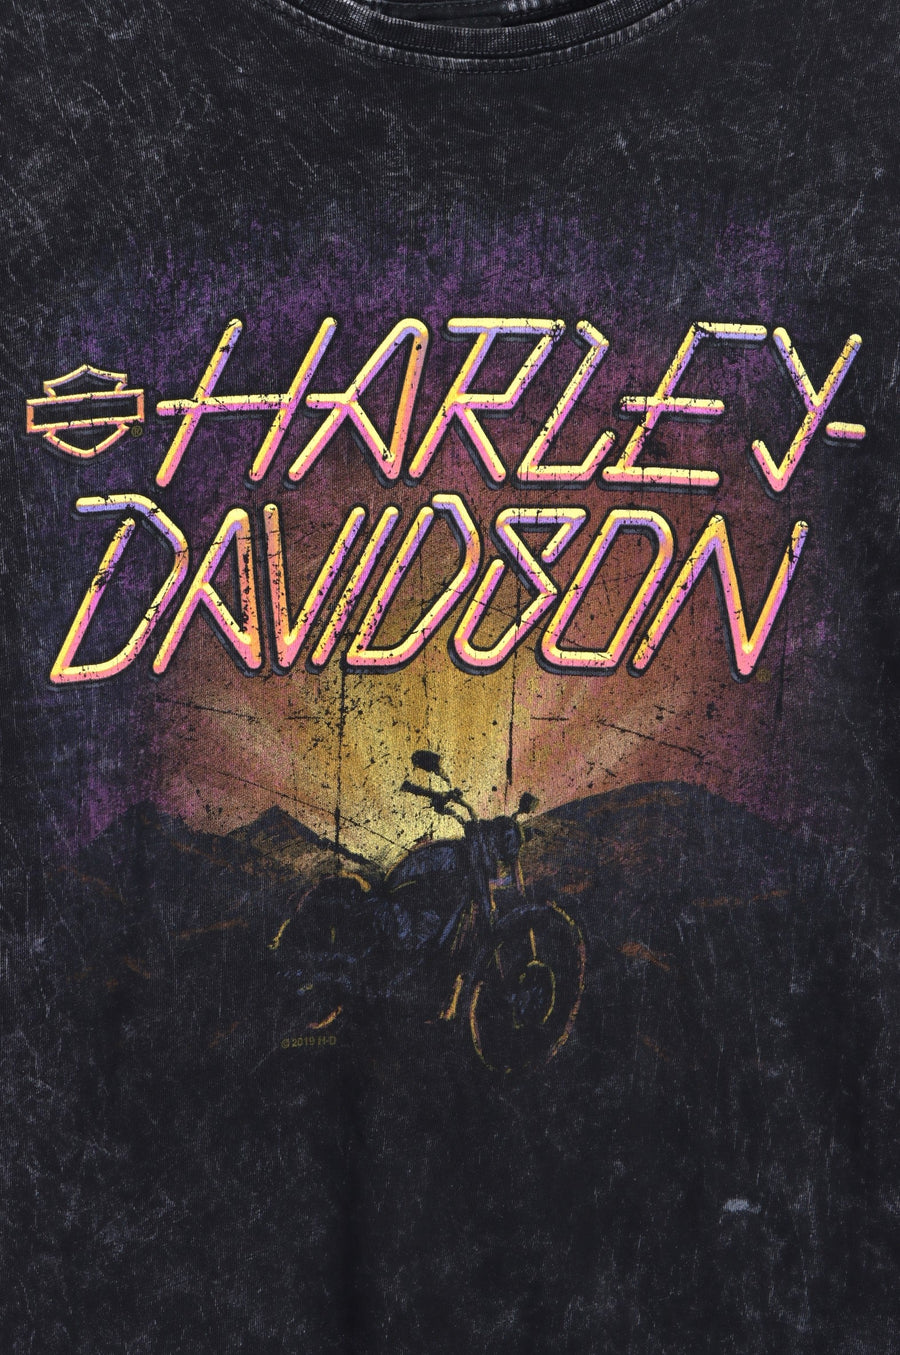 Orange County HARLEY DAVIDSON Sunset Bike Tee (Women's XS)